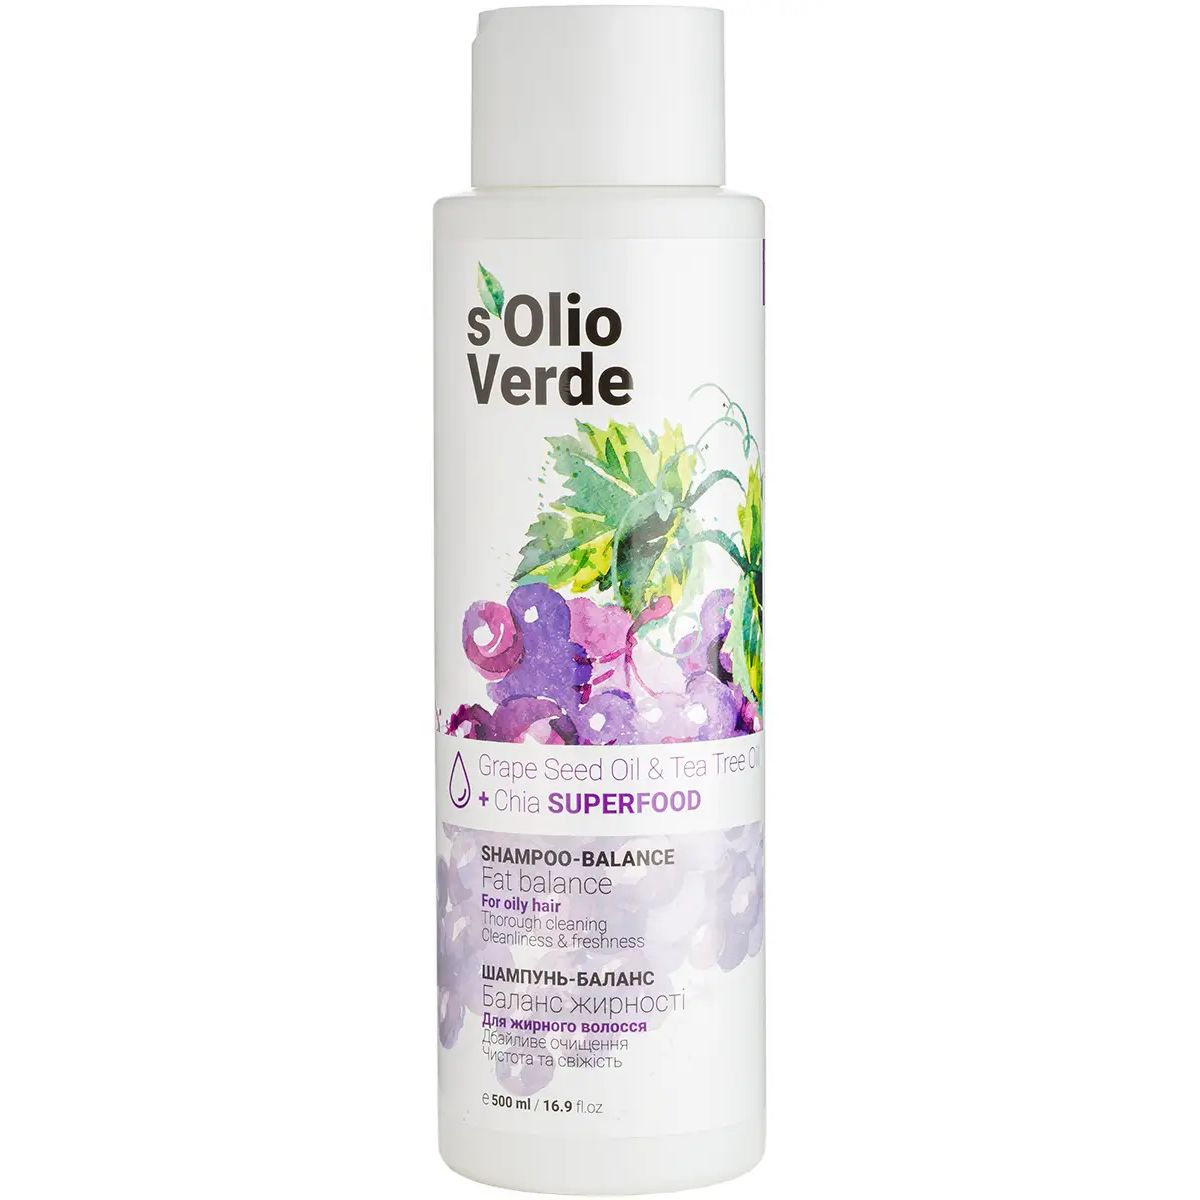 Шампунь-баланс S'olio Verde Grape Seed Oil для жирных волос 500 мл - фото 1